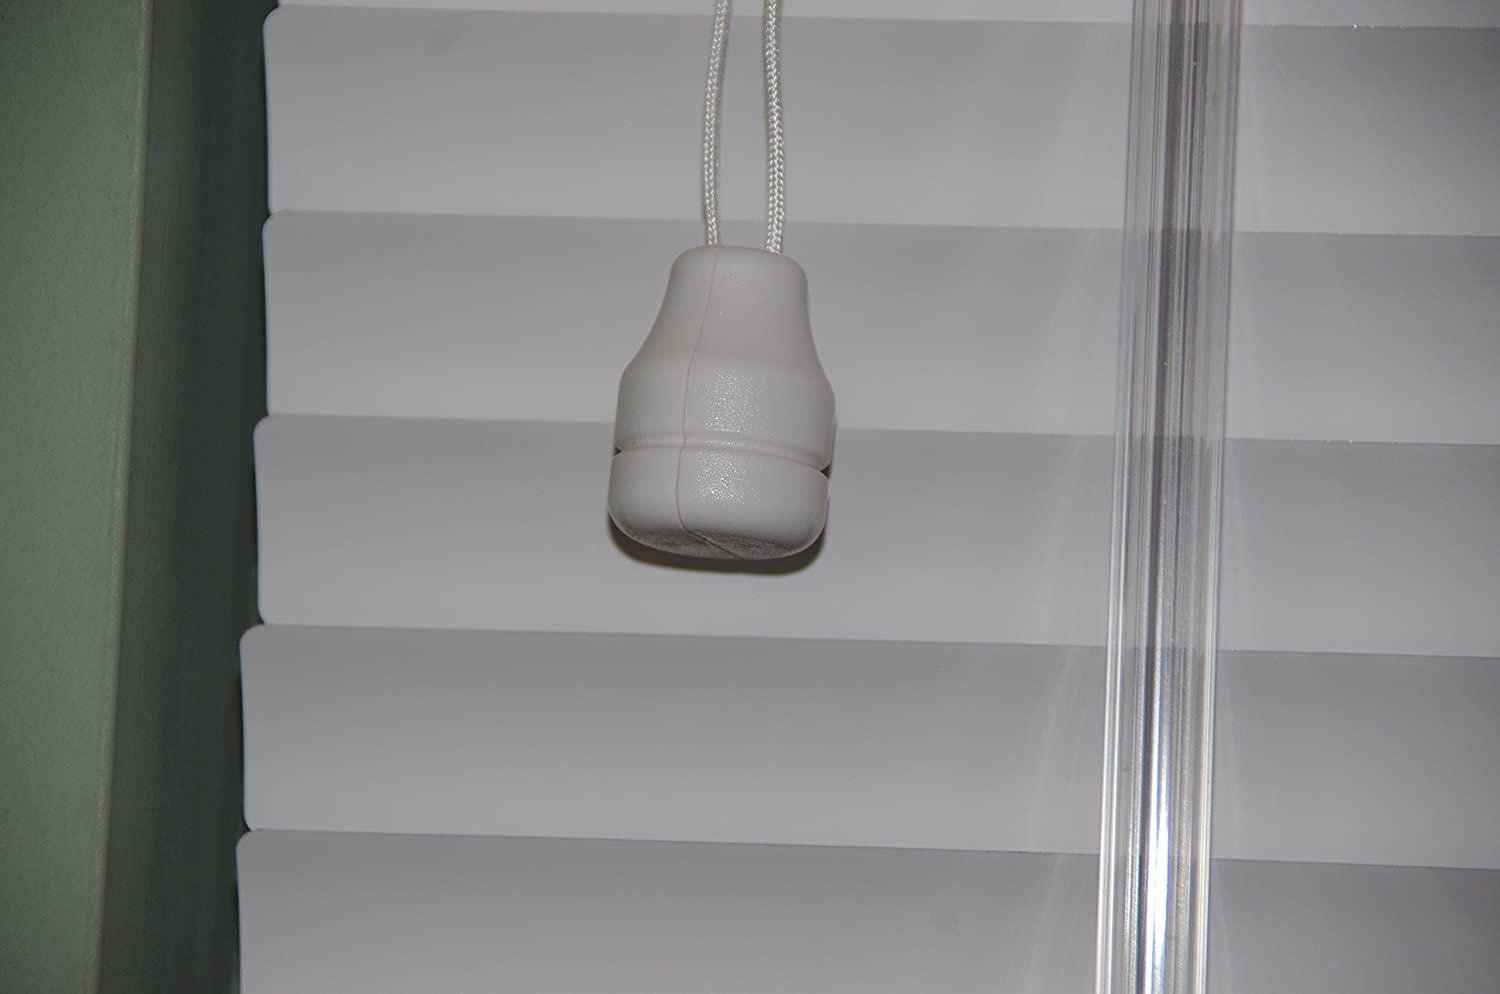 Large White Bell Shape Window Blind Tassels. This Child-Safe